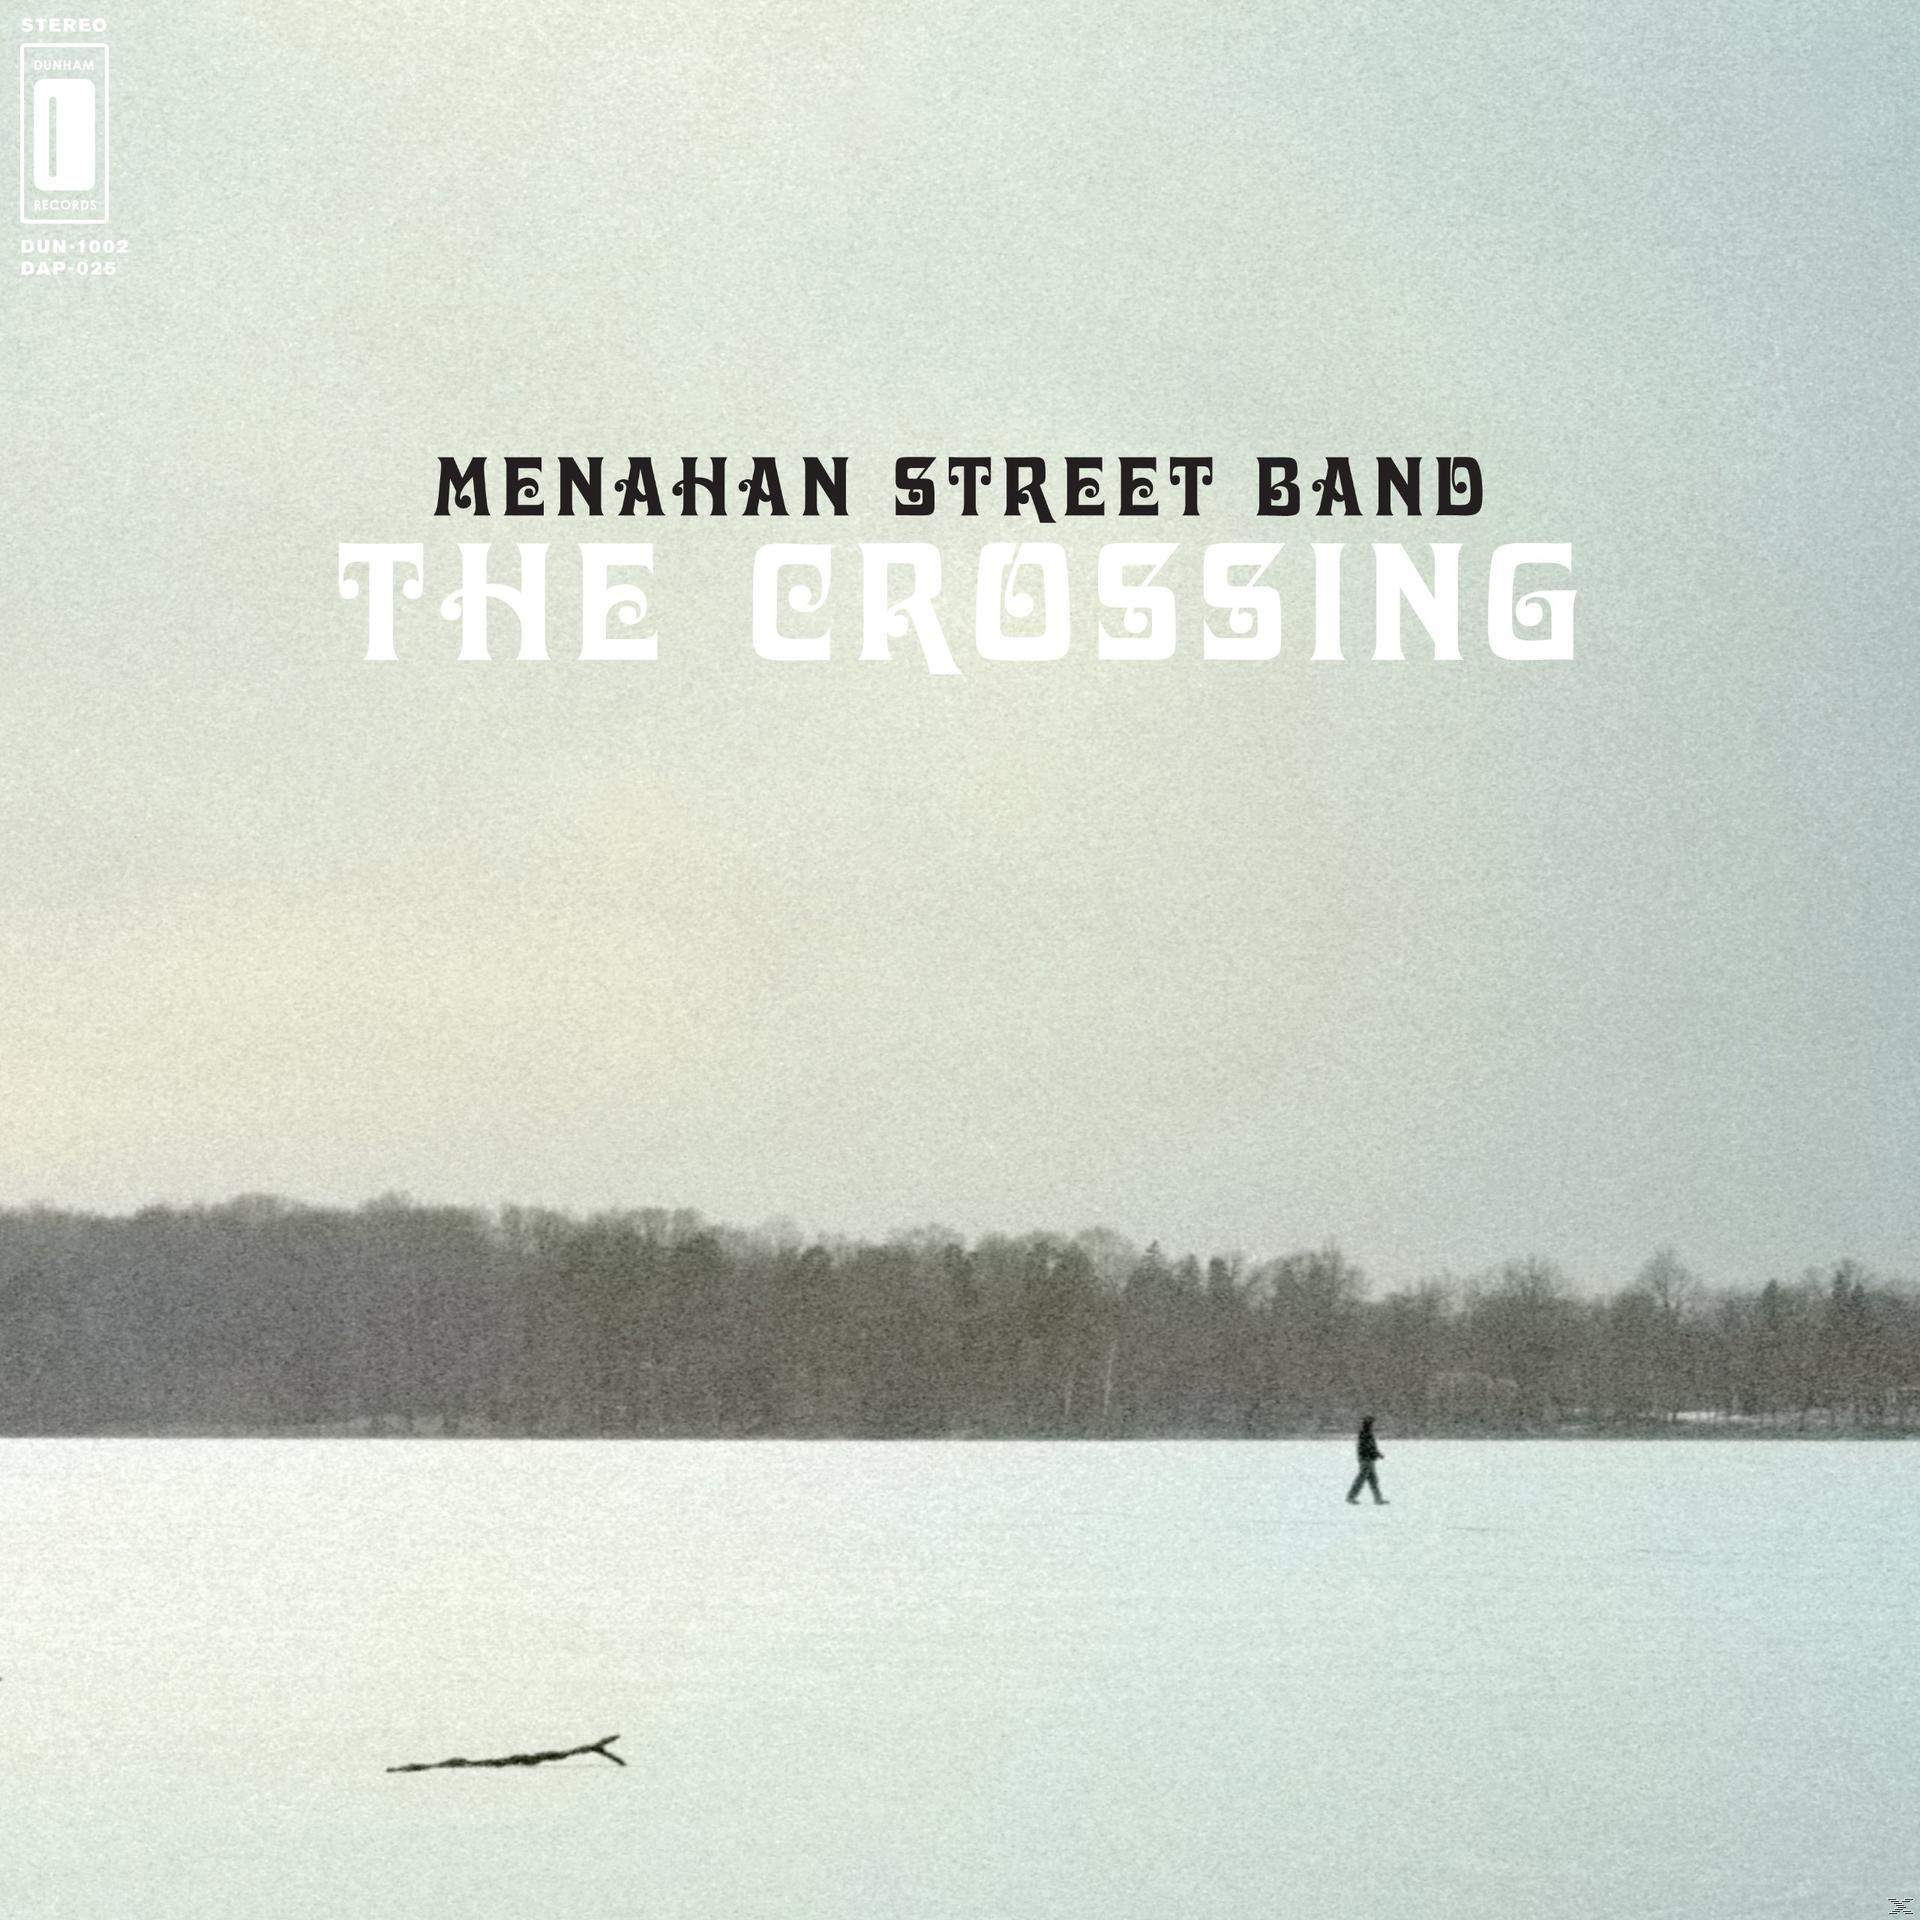 - Band The Crossing Menahan Street + - Download) (LP